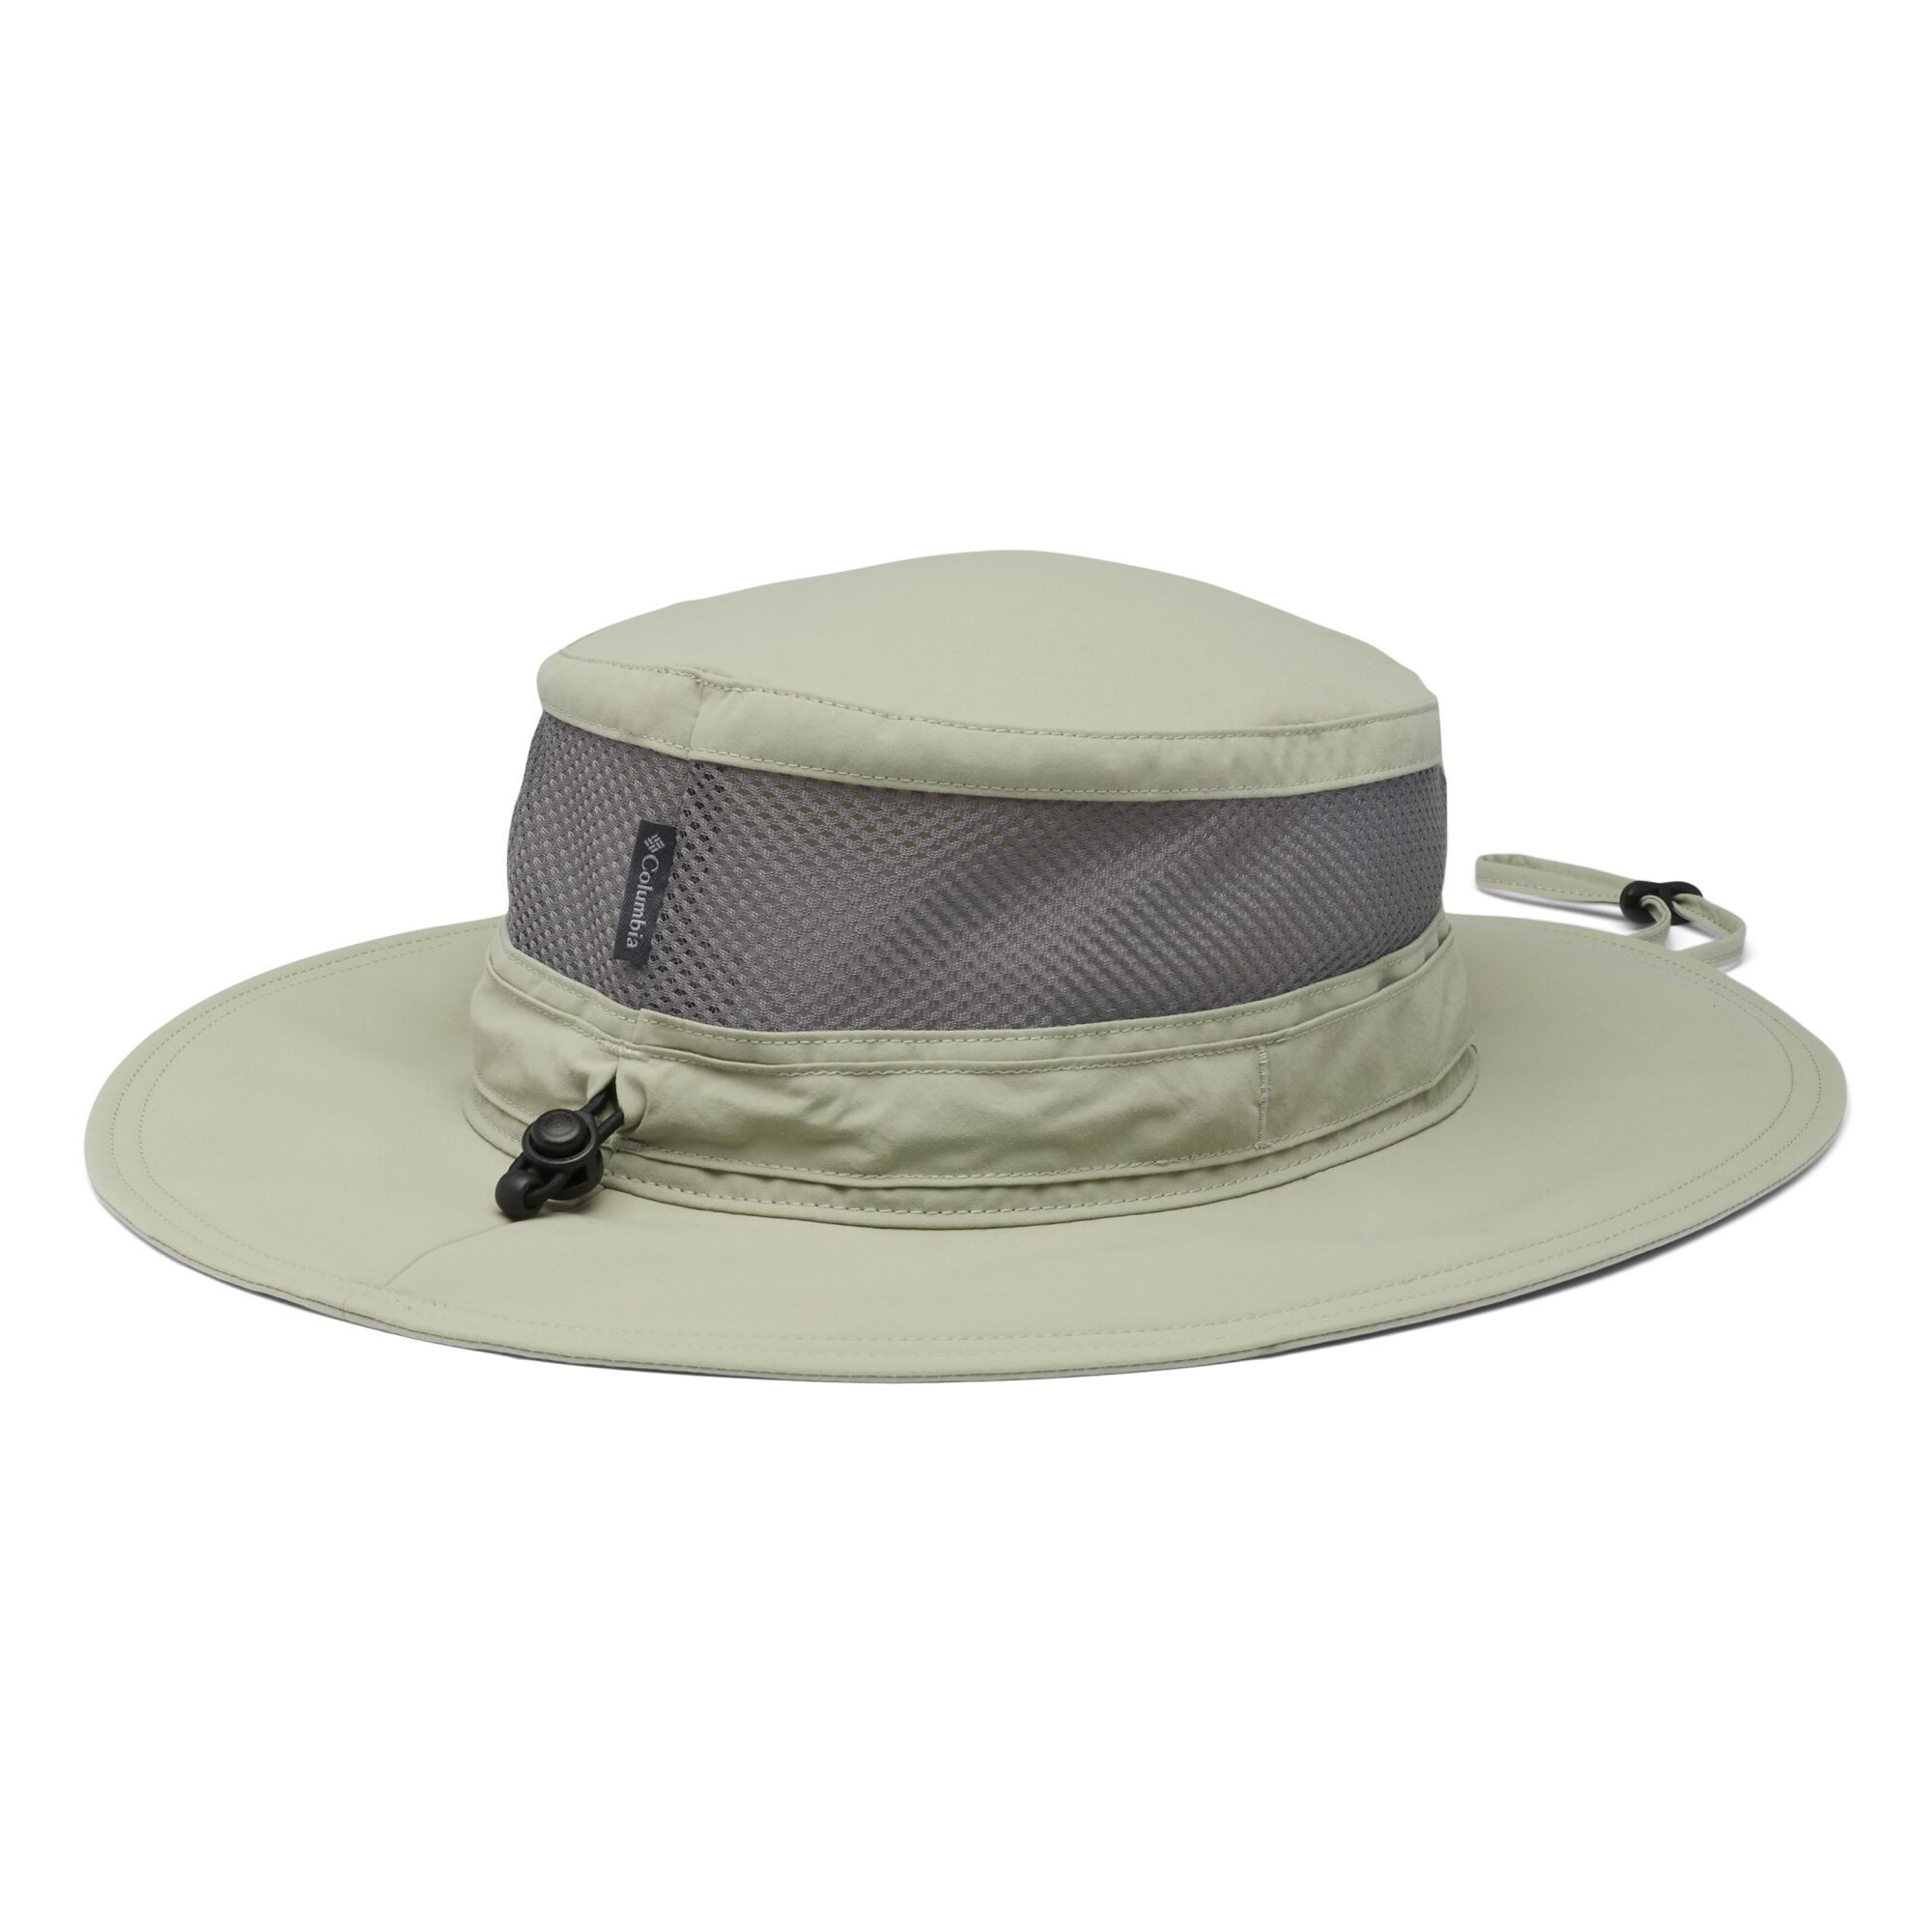 A safari hat from Columbia 